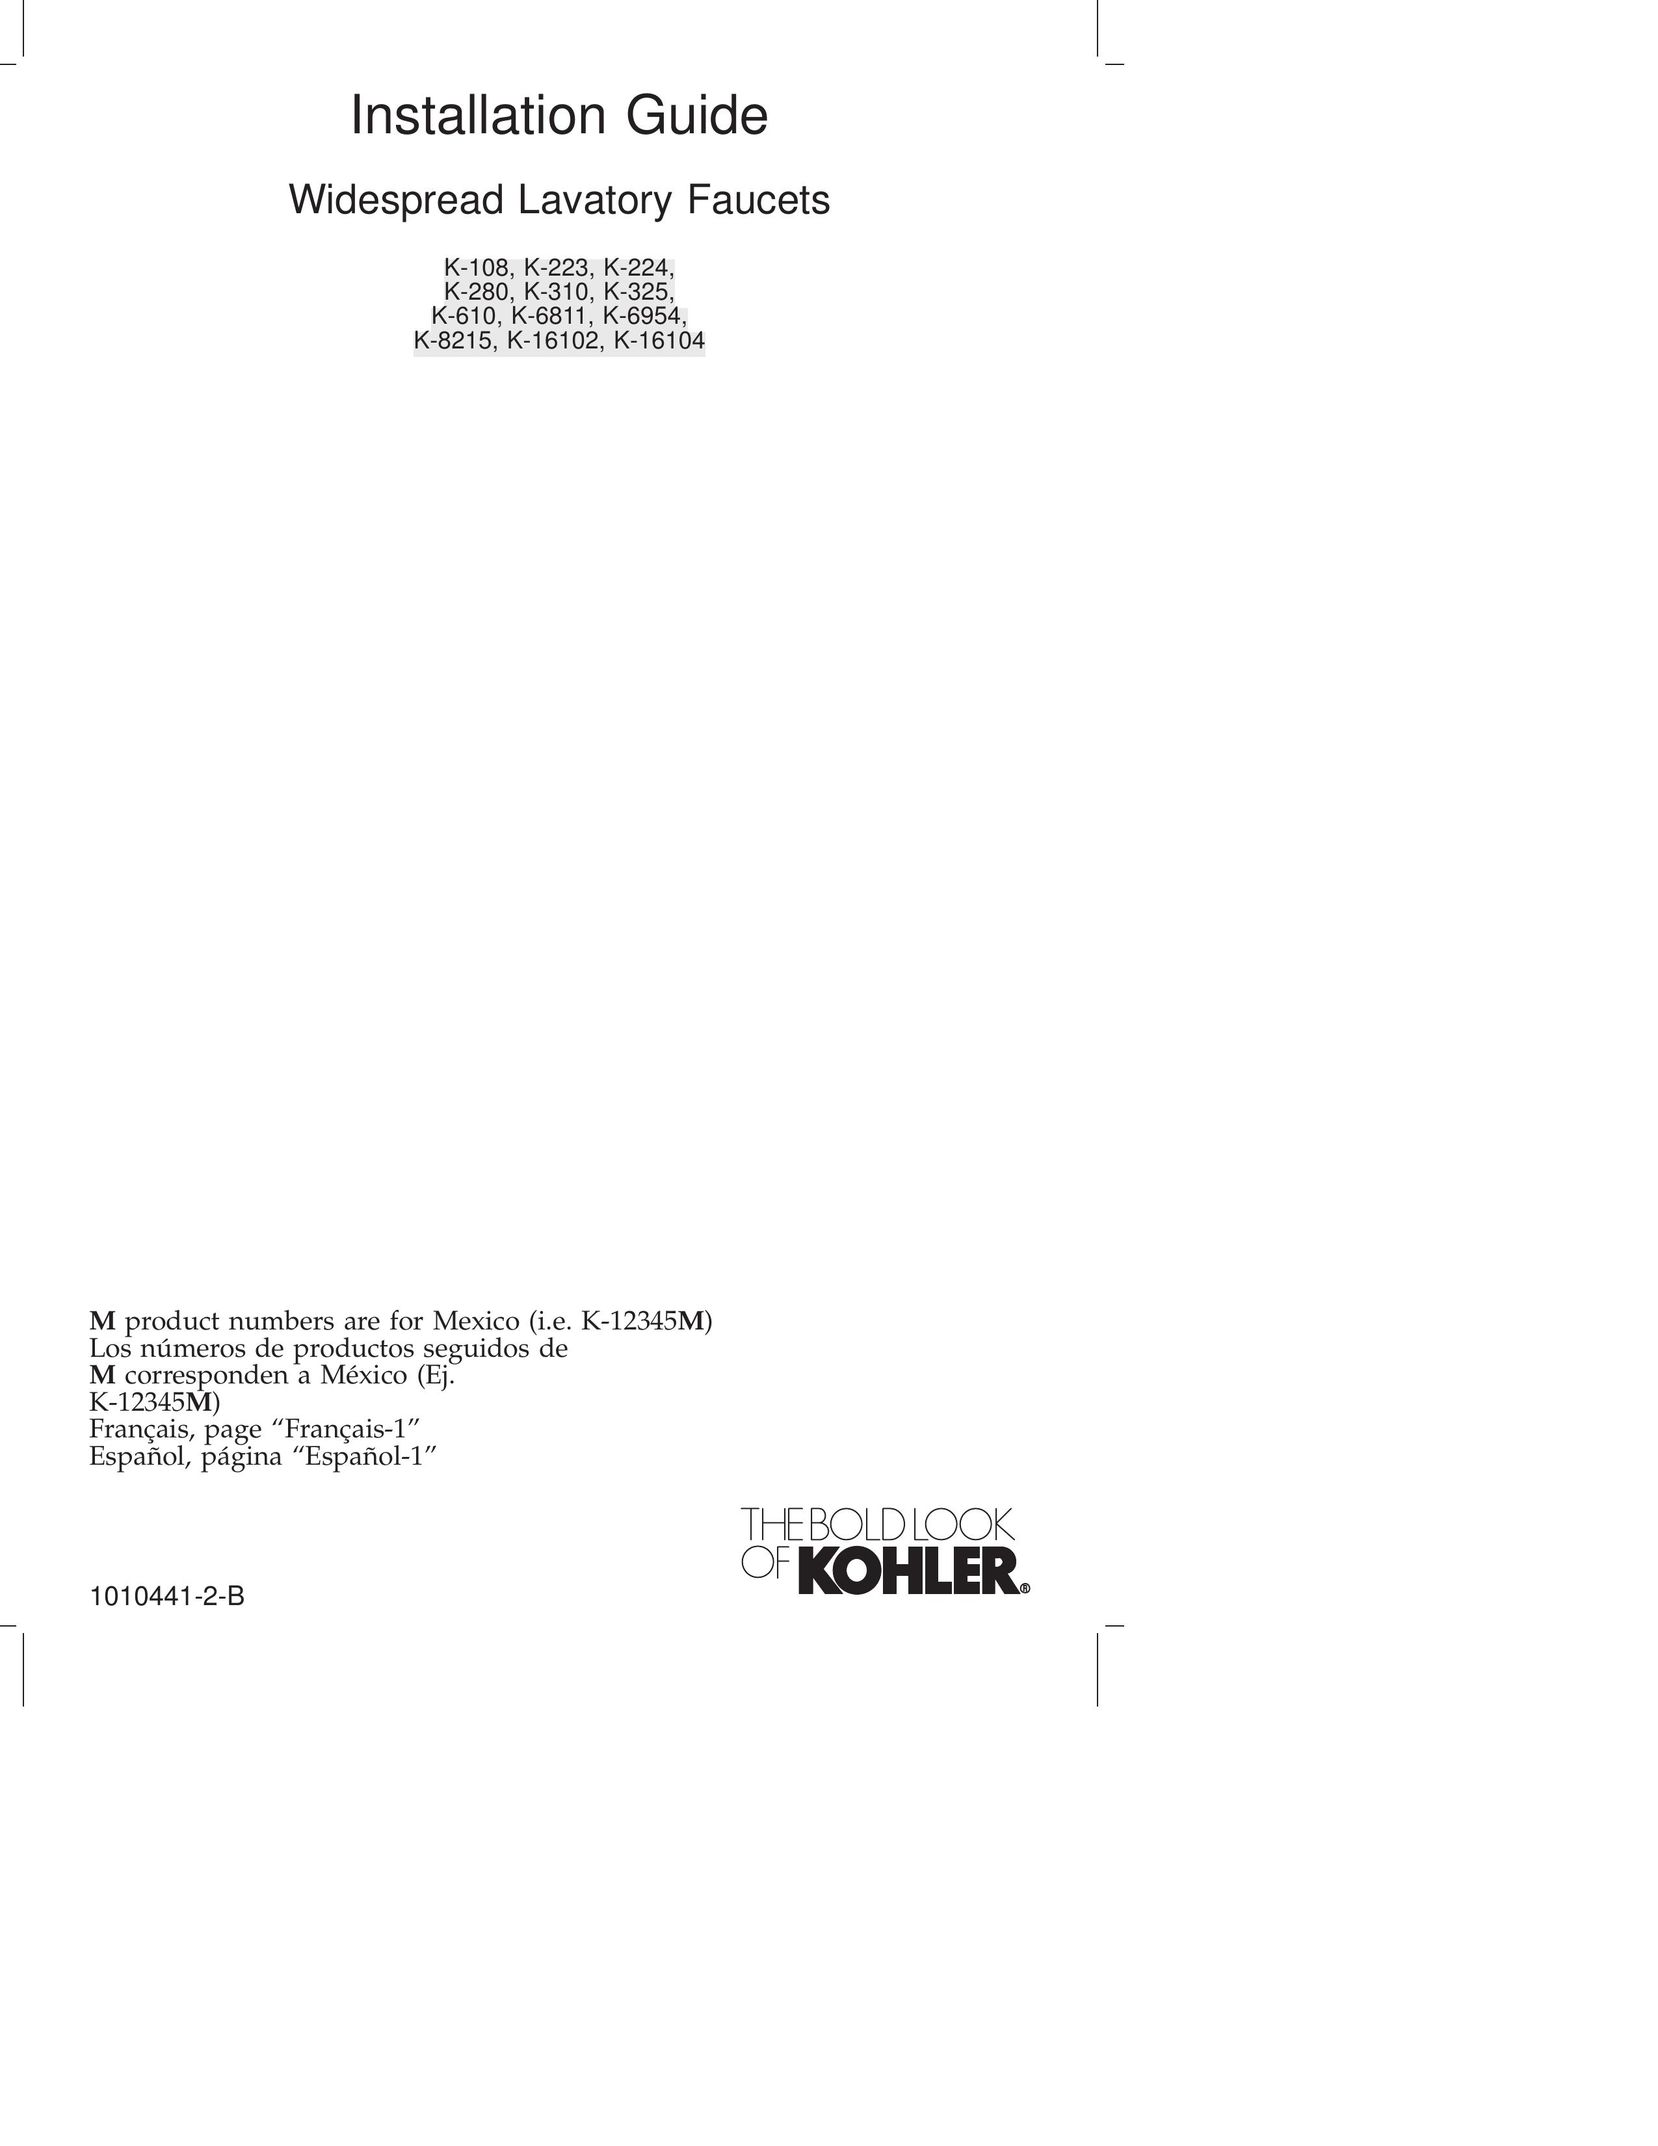 Kohler K-16102 Plumbing Product User Manual